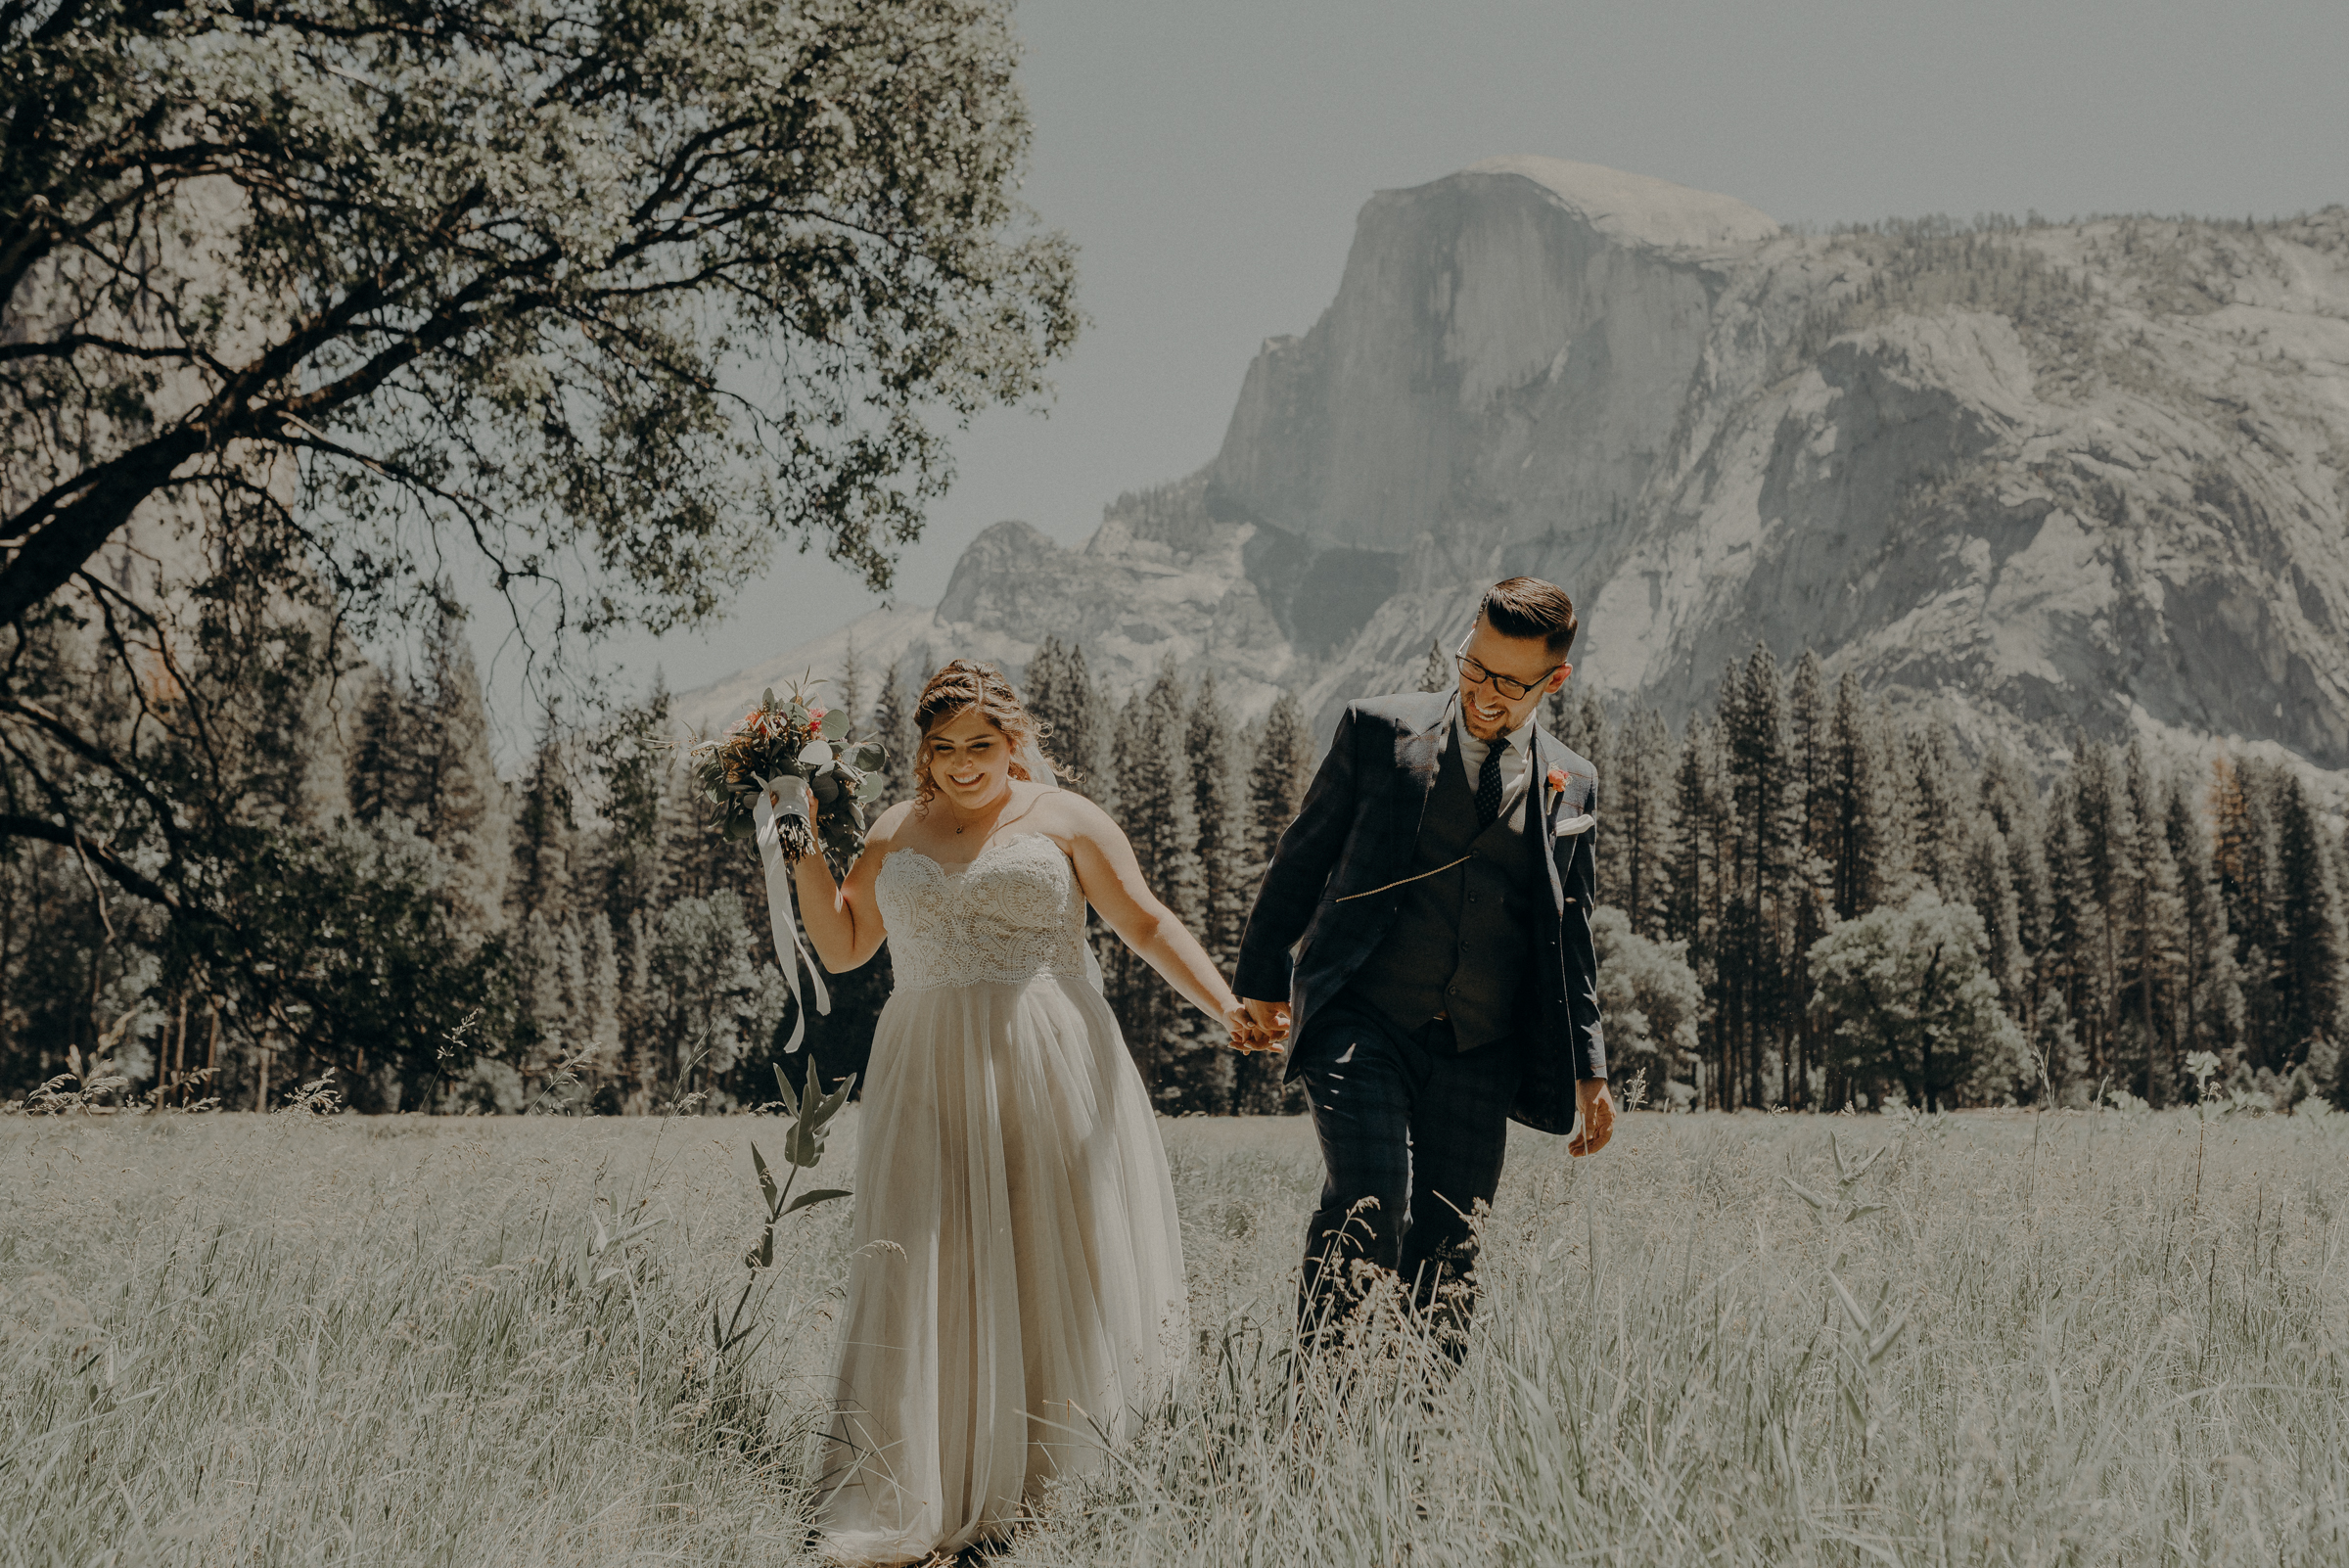 Los Angeles Wedding Photographers - Yosemite Destination Wedding Elopement - IsaiahAndTaylor.com -090.jpg